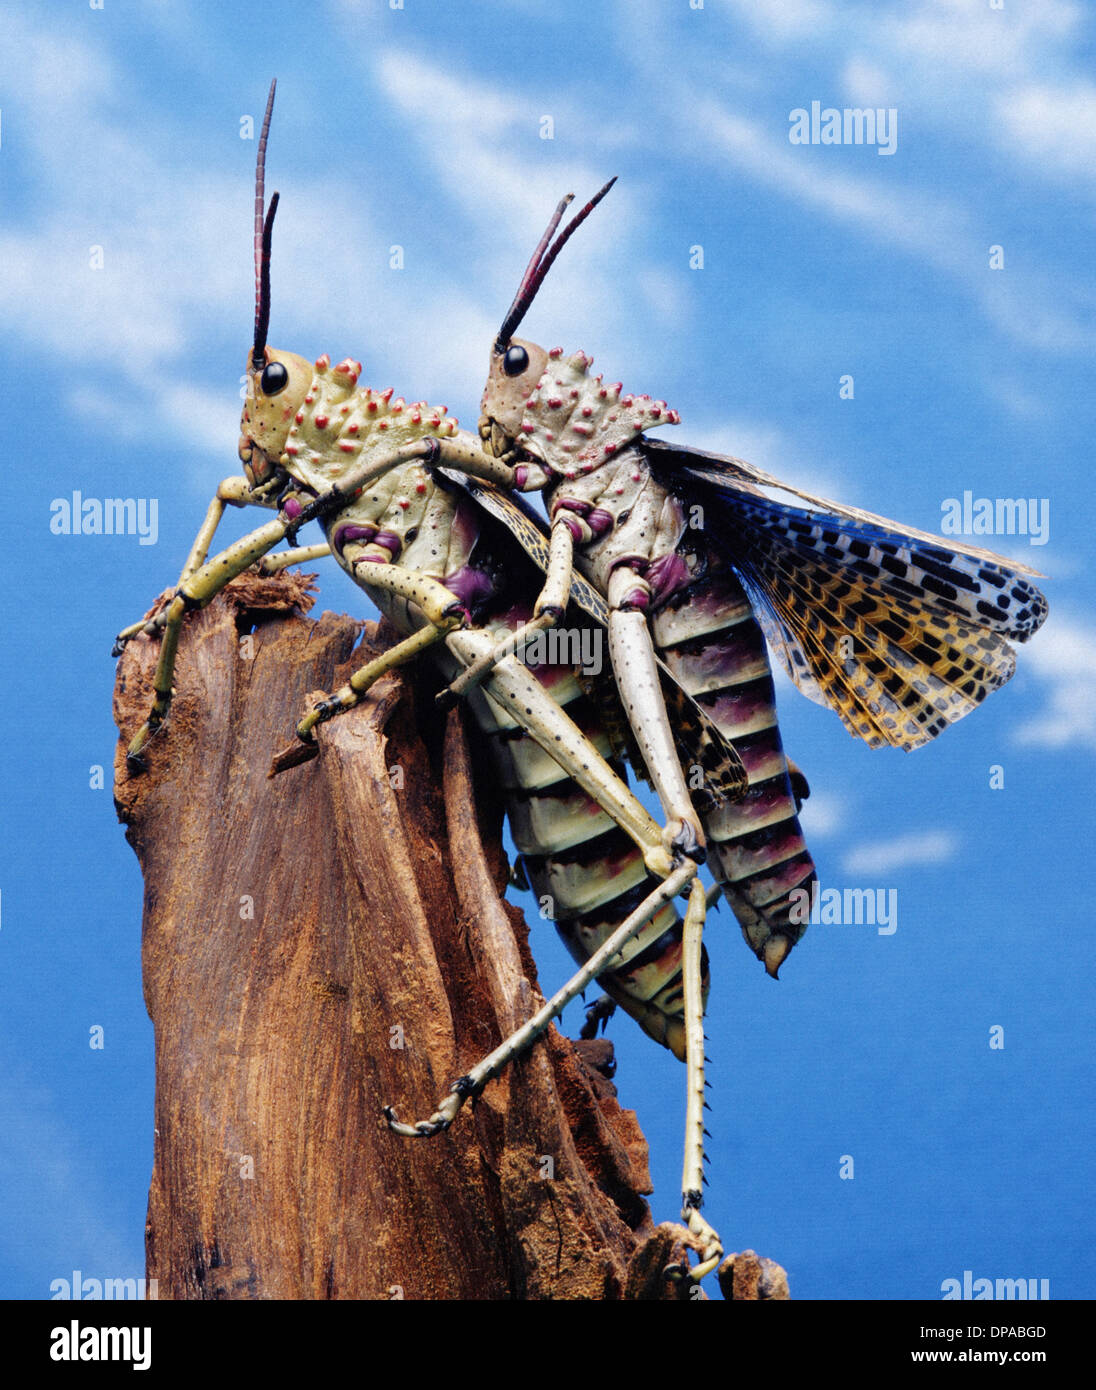 Grasshoppers on tree stump Stock Photo